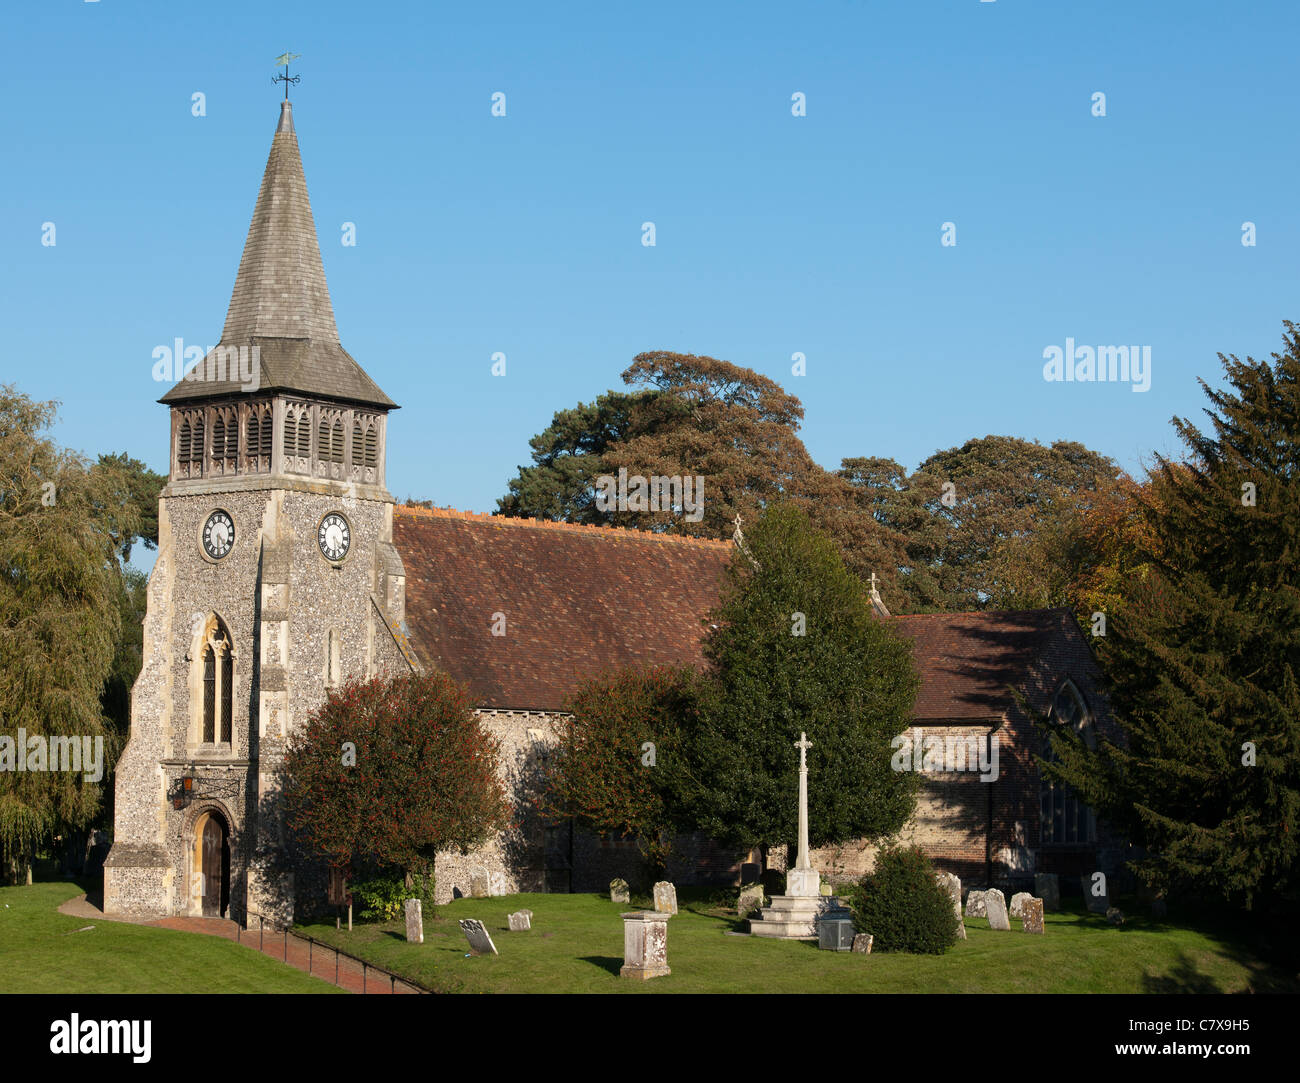 St Nicholas, Parish church of the Hampshire village of Wickham, Wickham, Hampshire, England, Uk. Stock Photo